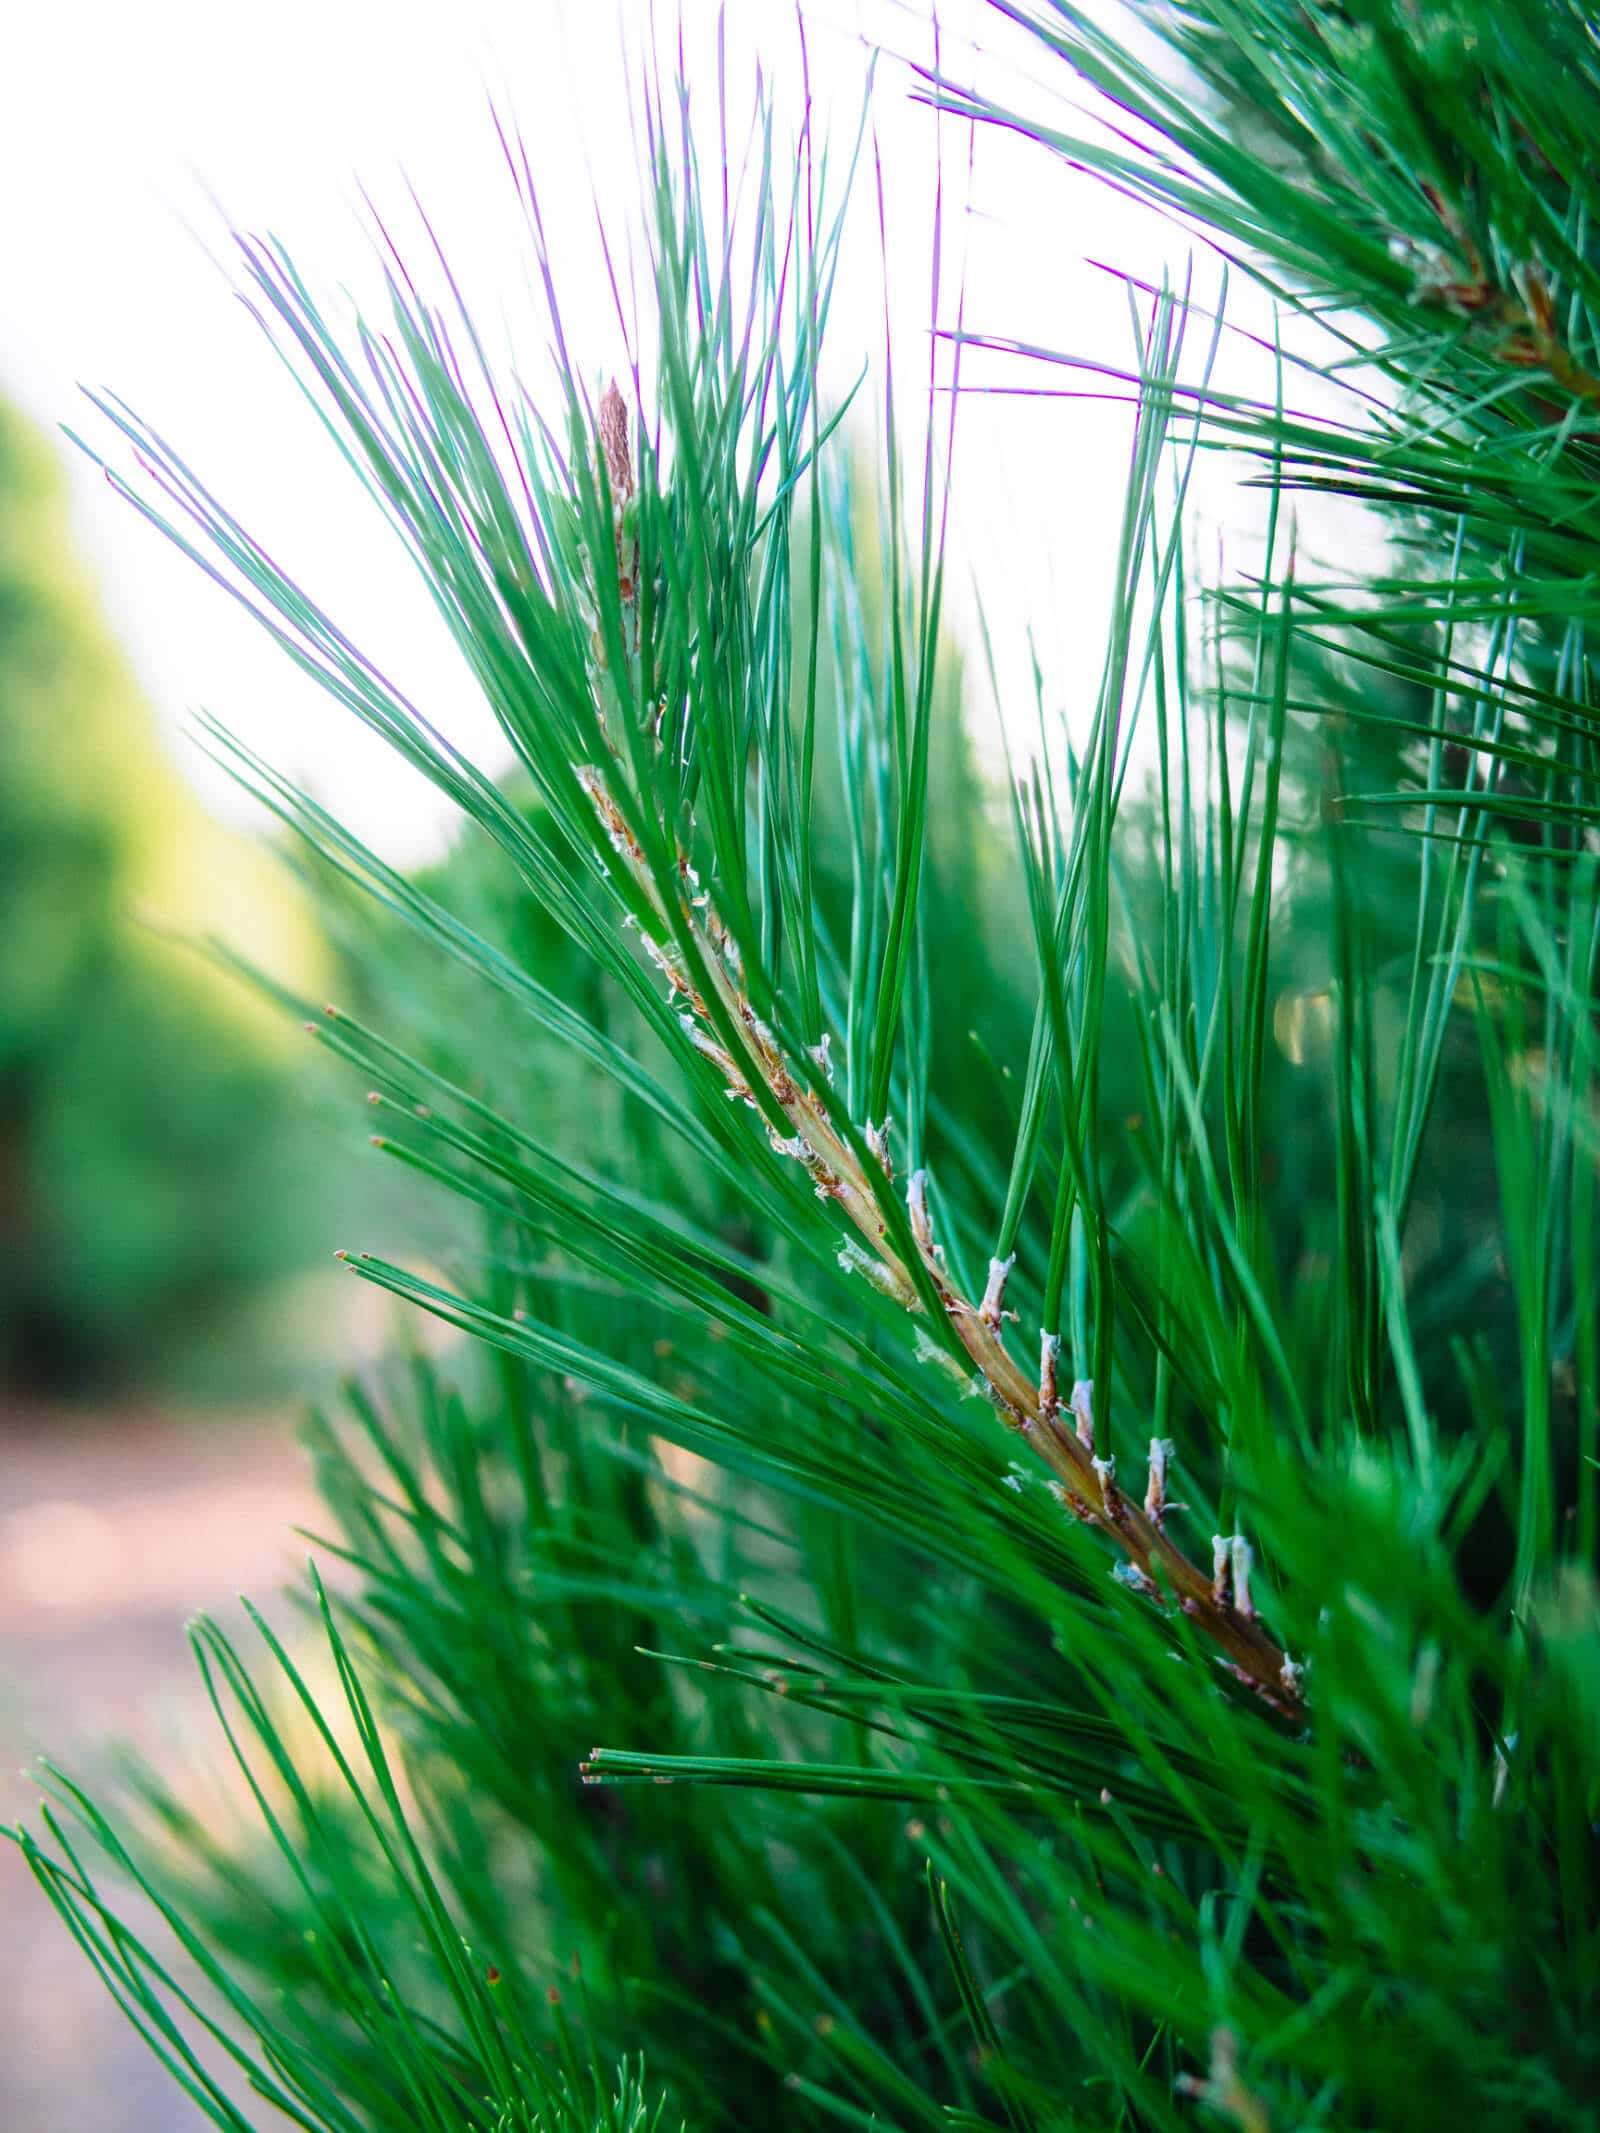 Tips to keep your Christmas tree fresh and green